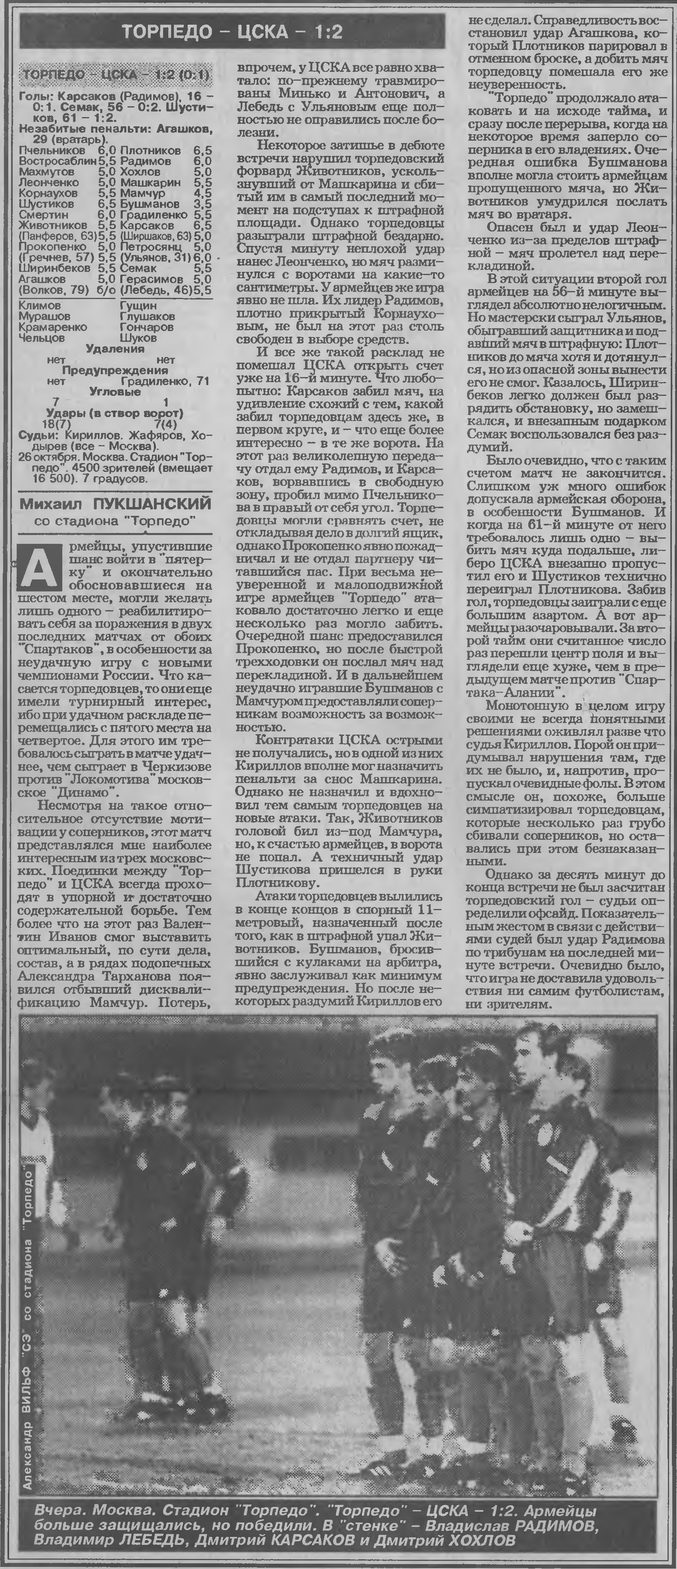 1995-10-26.TorpedoM-CSKA.1